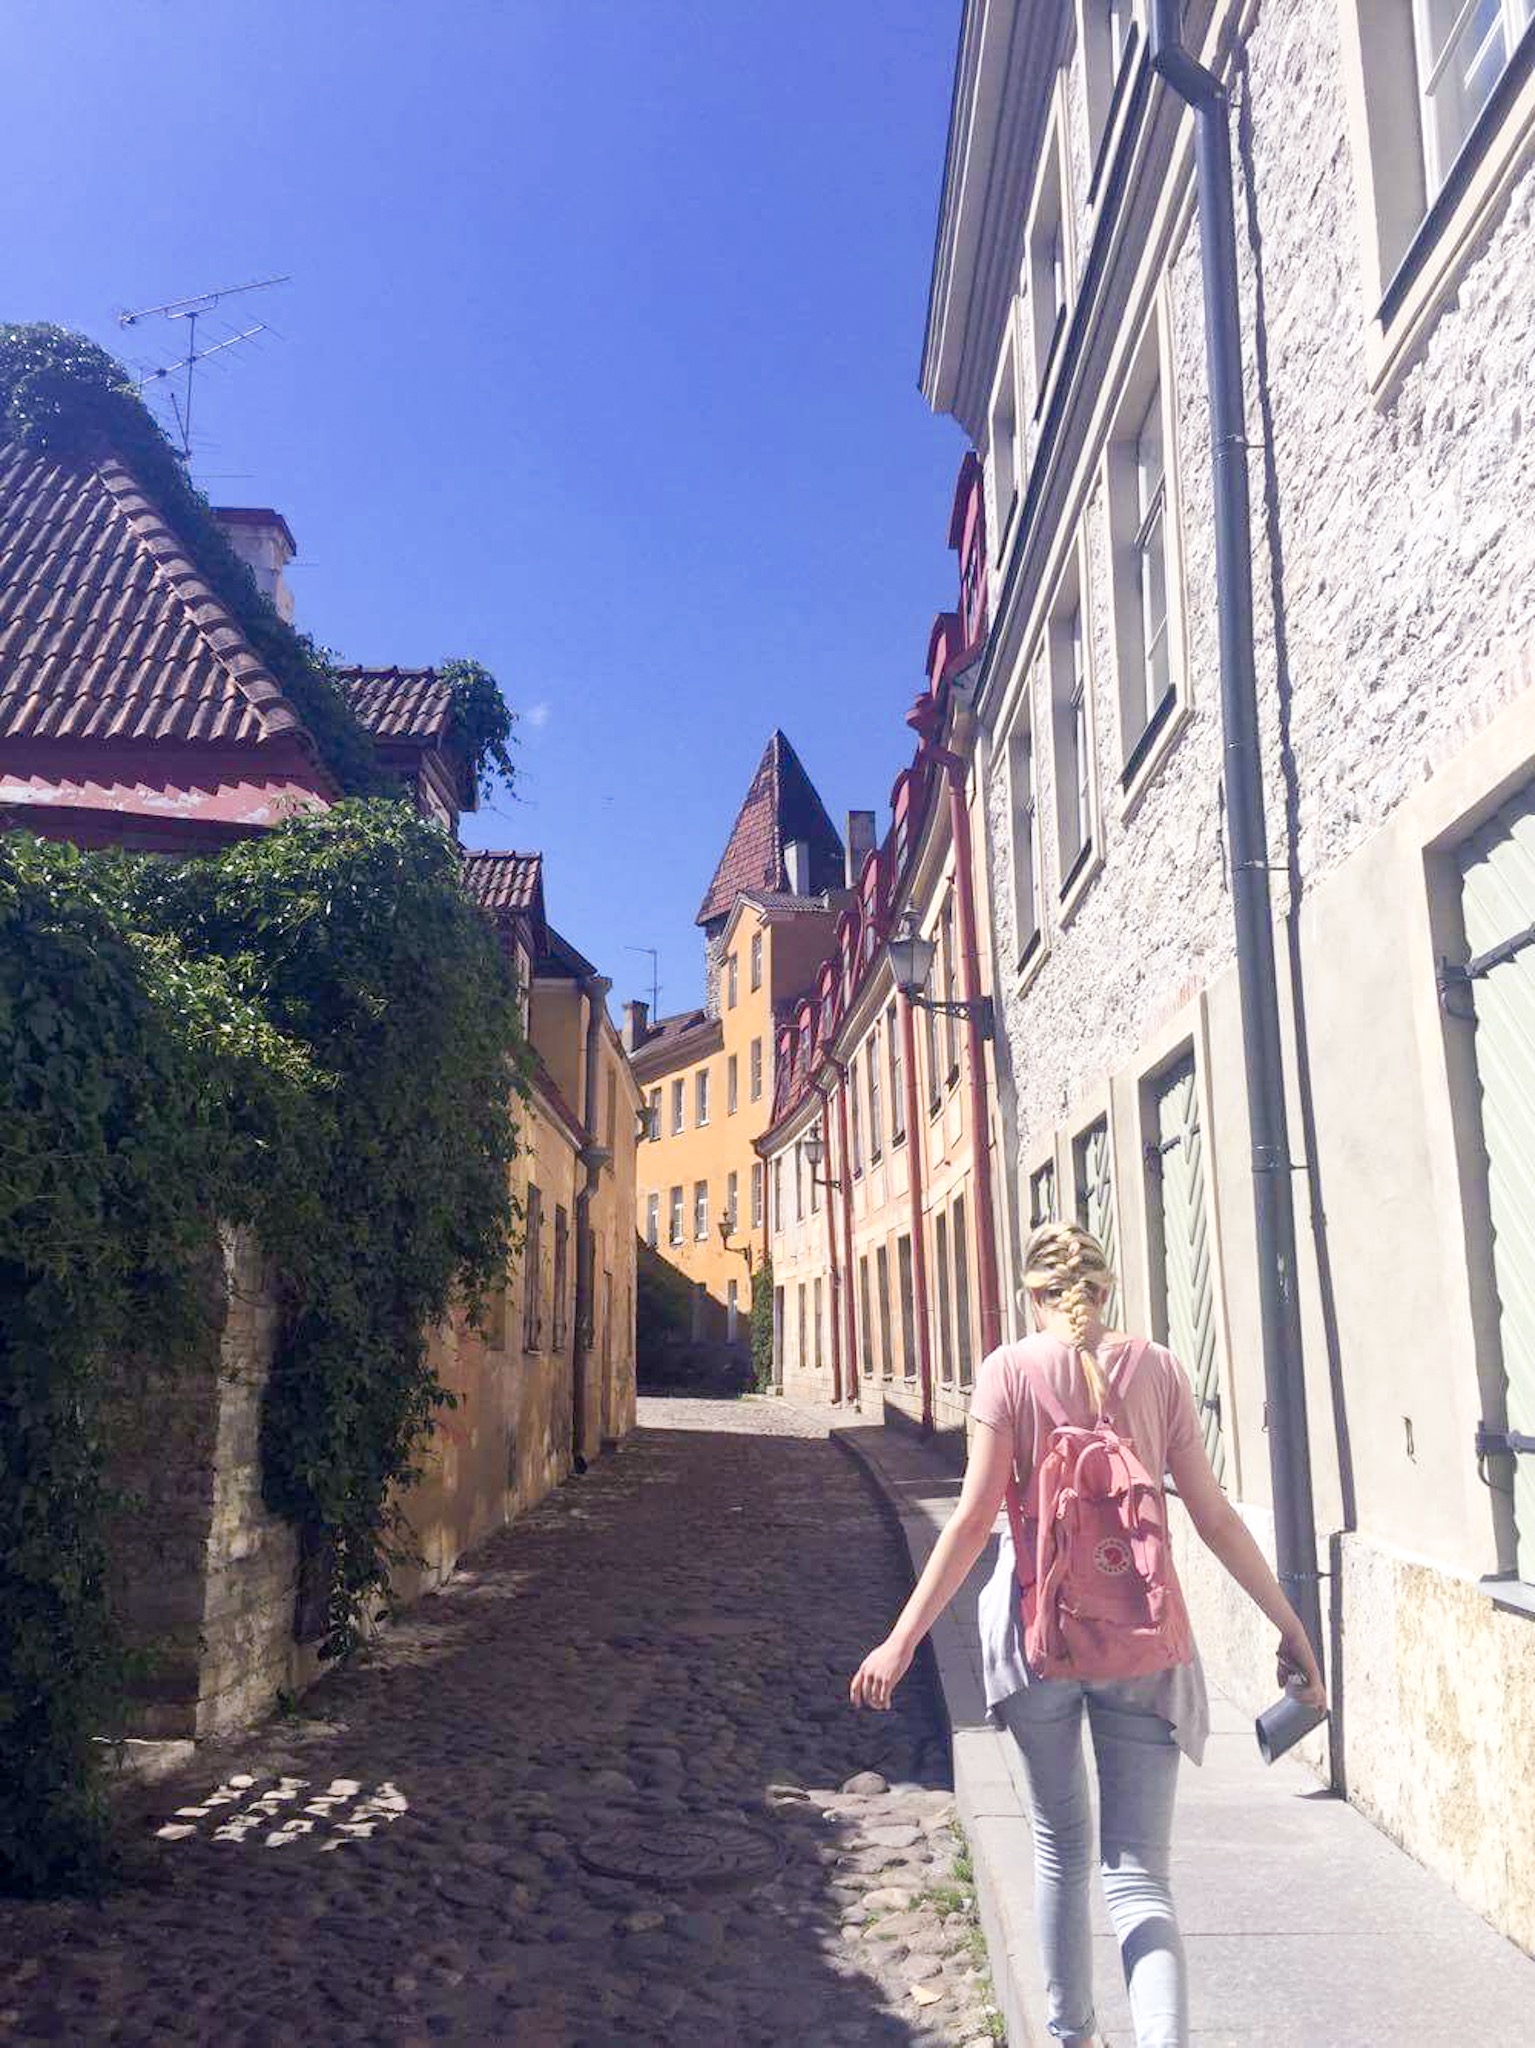 Wandering through the streets of Tallinn